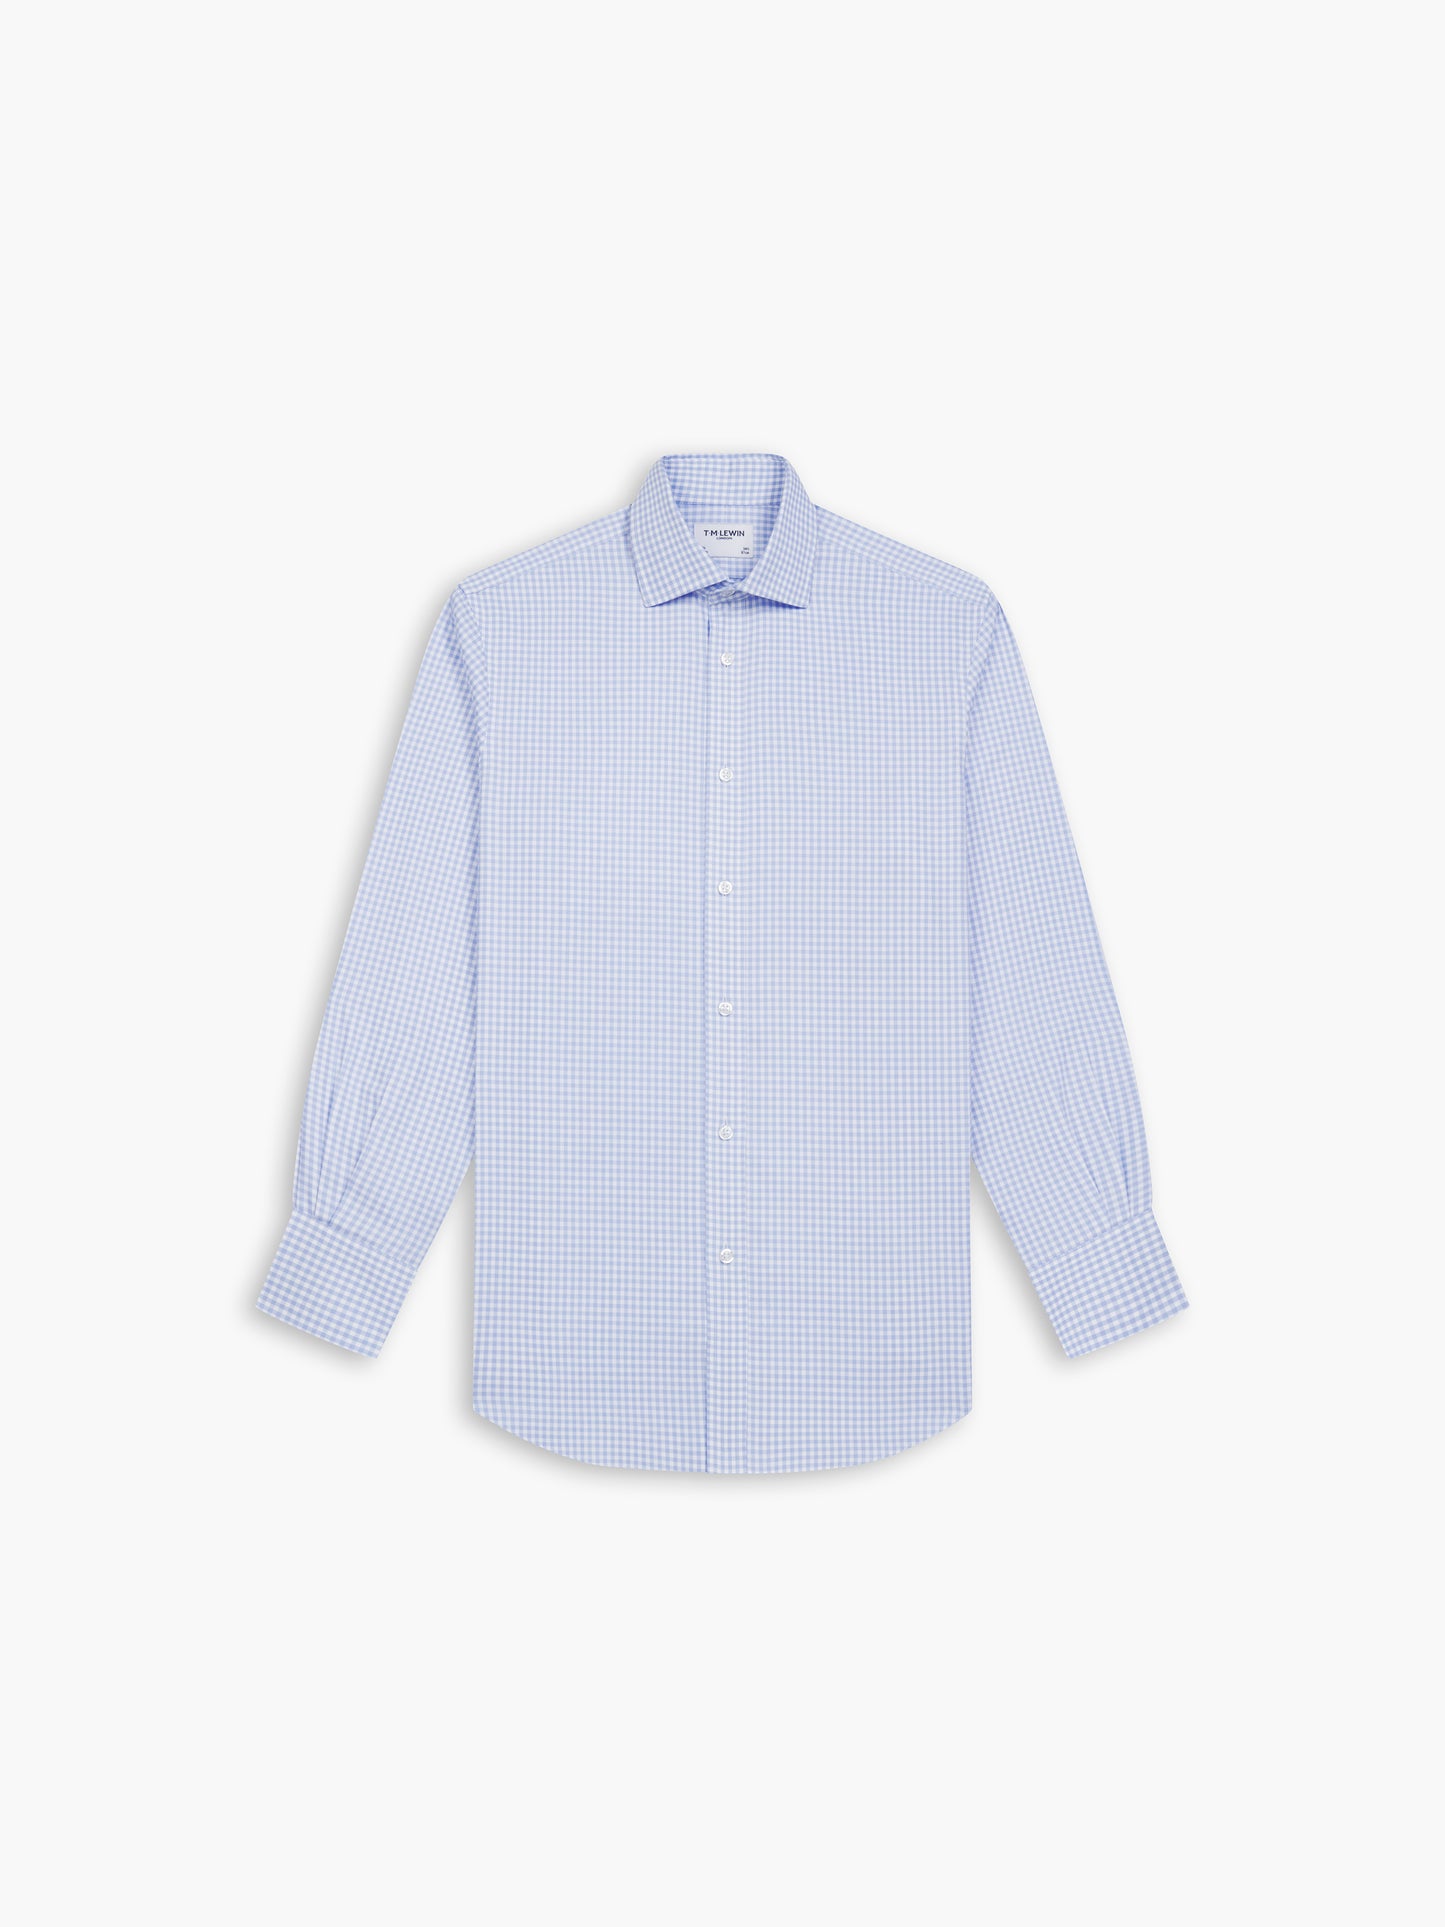 Non-Iron Light Blue Gingham Twill Regular Fit Single Cuff Classic Collar Shirt